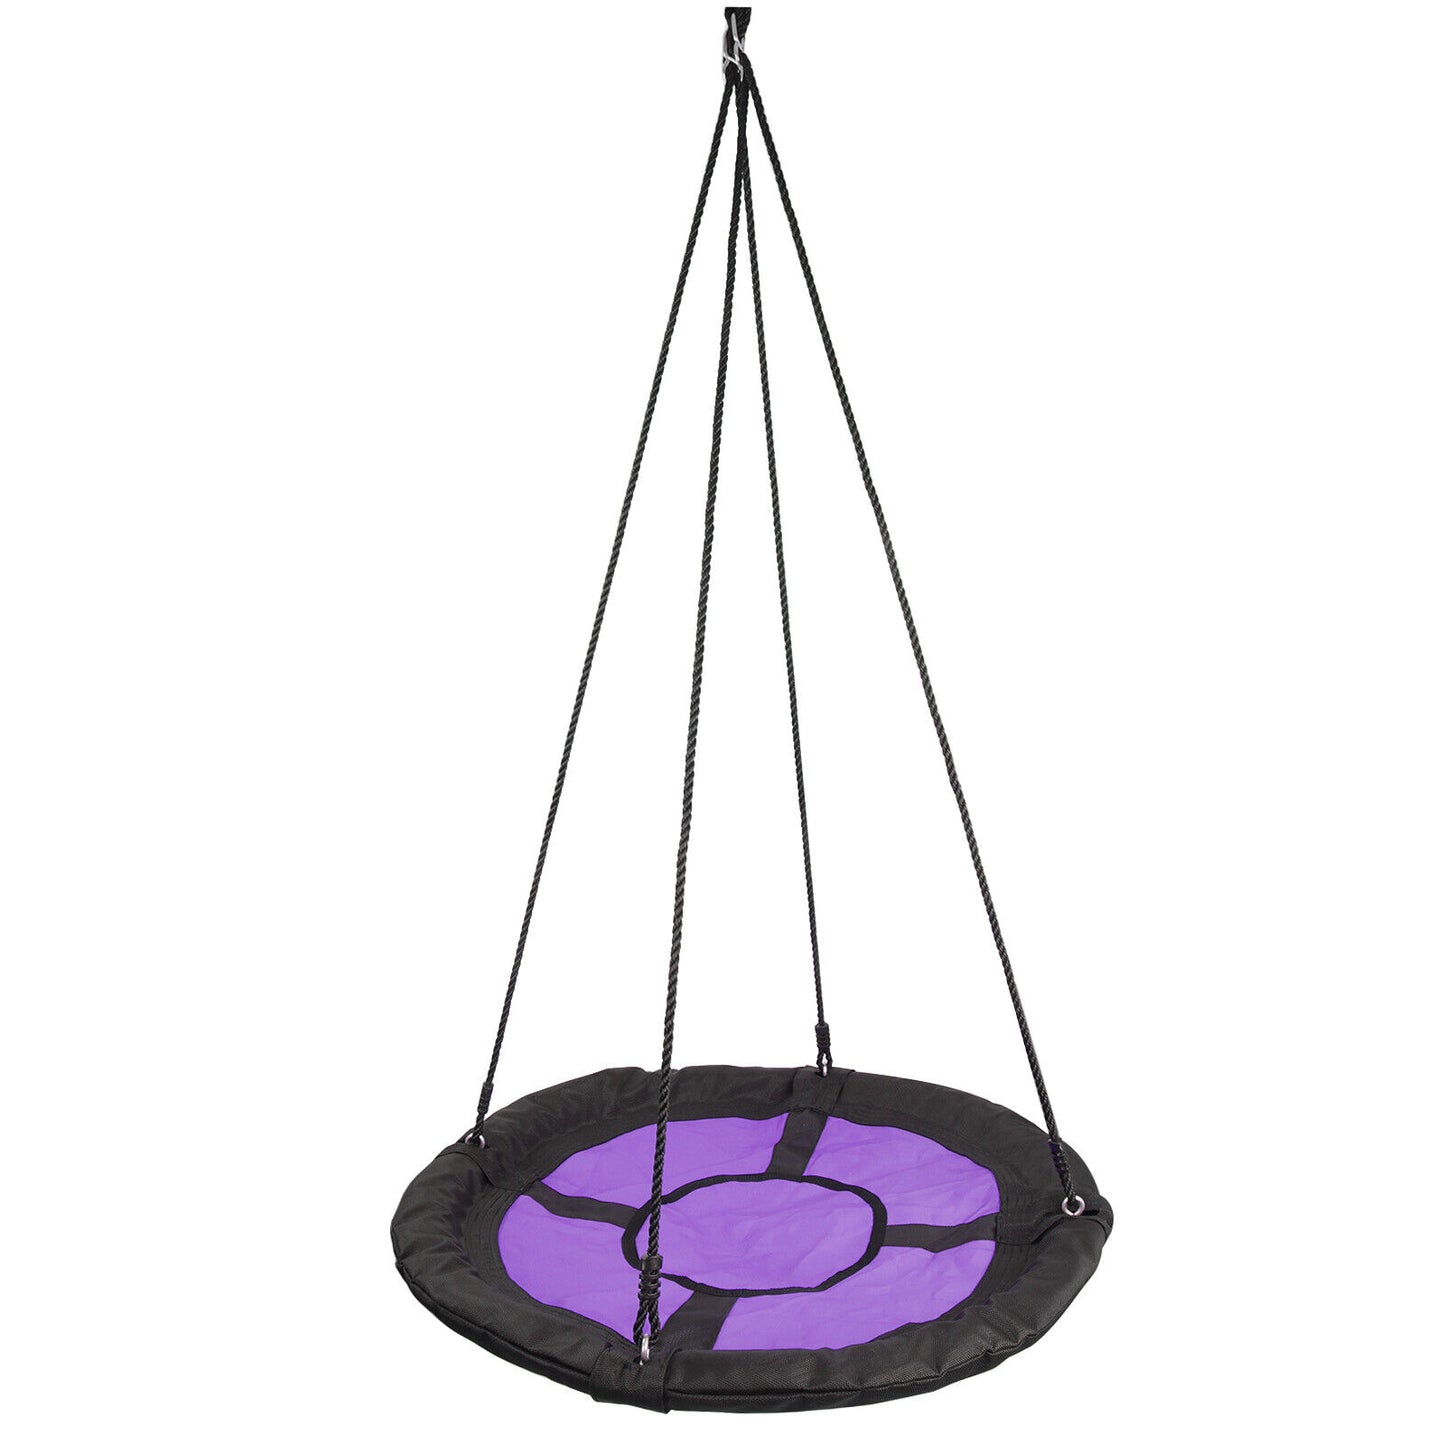 Giant 40" Disc Swing Seat Flying Saucer Tree web Swings Playground Backyard Home